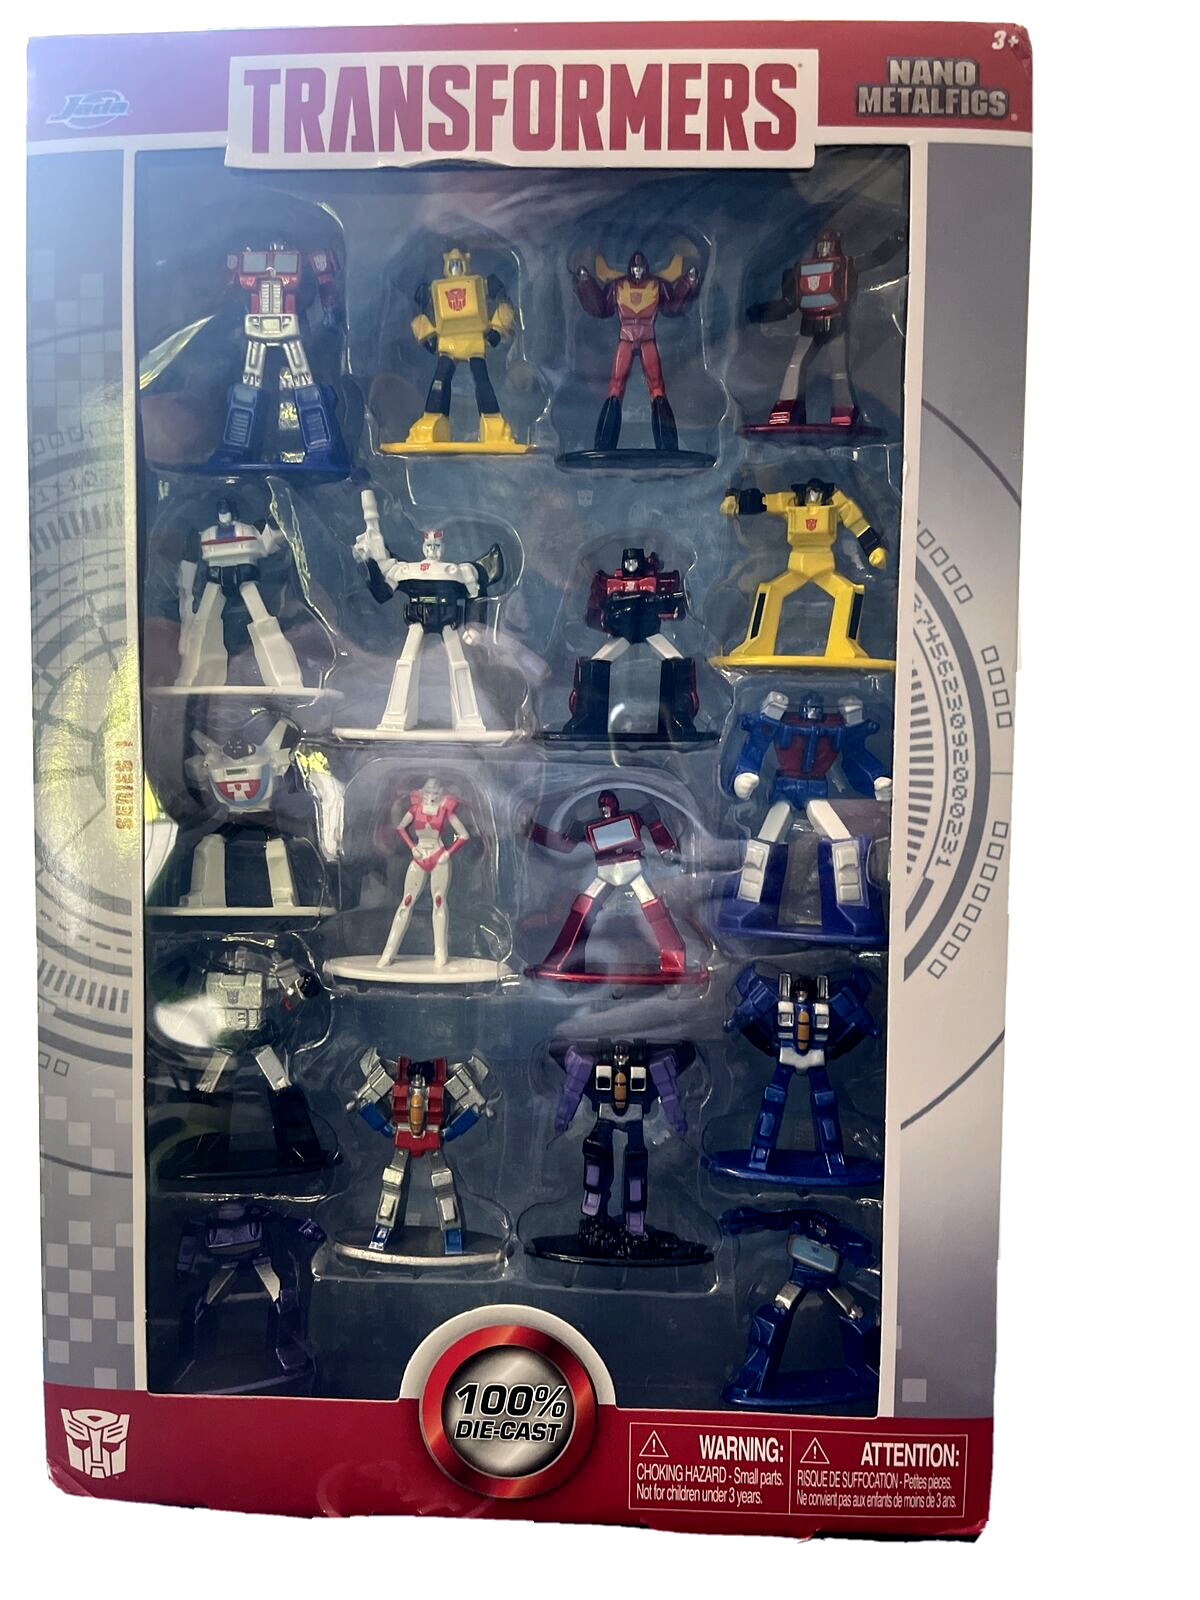 Transformers Nano Metalfigs Diecast 18 Figures Collector Set New Jada Toys